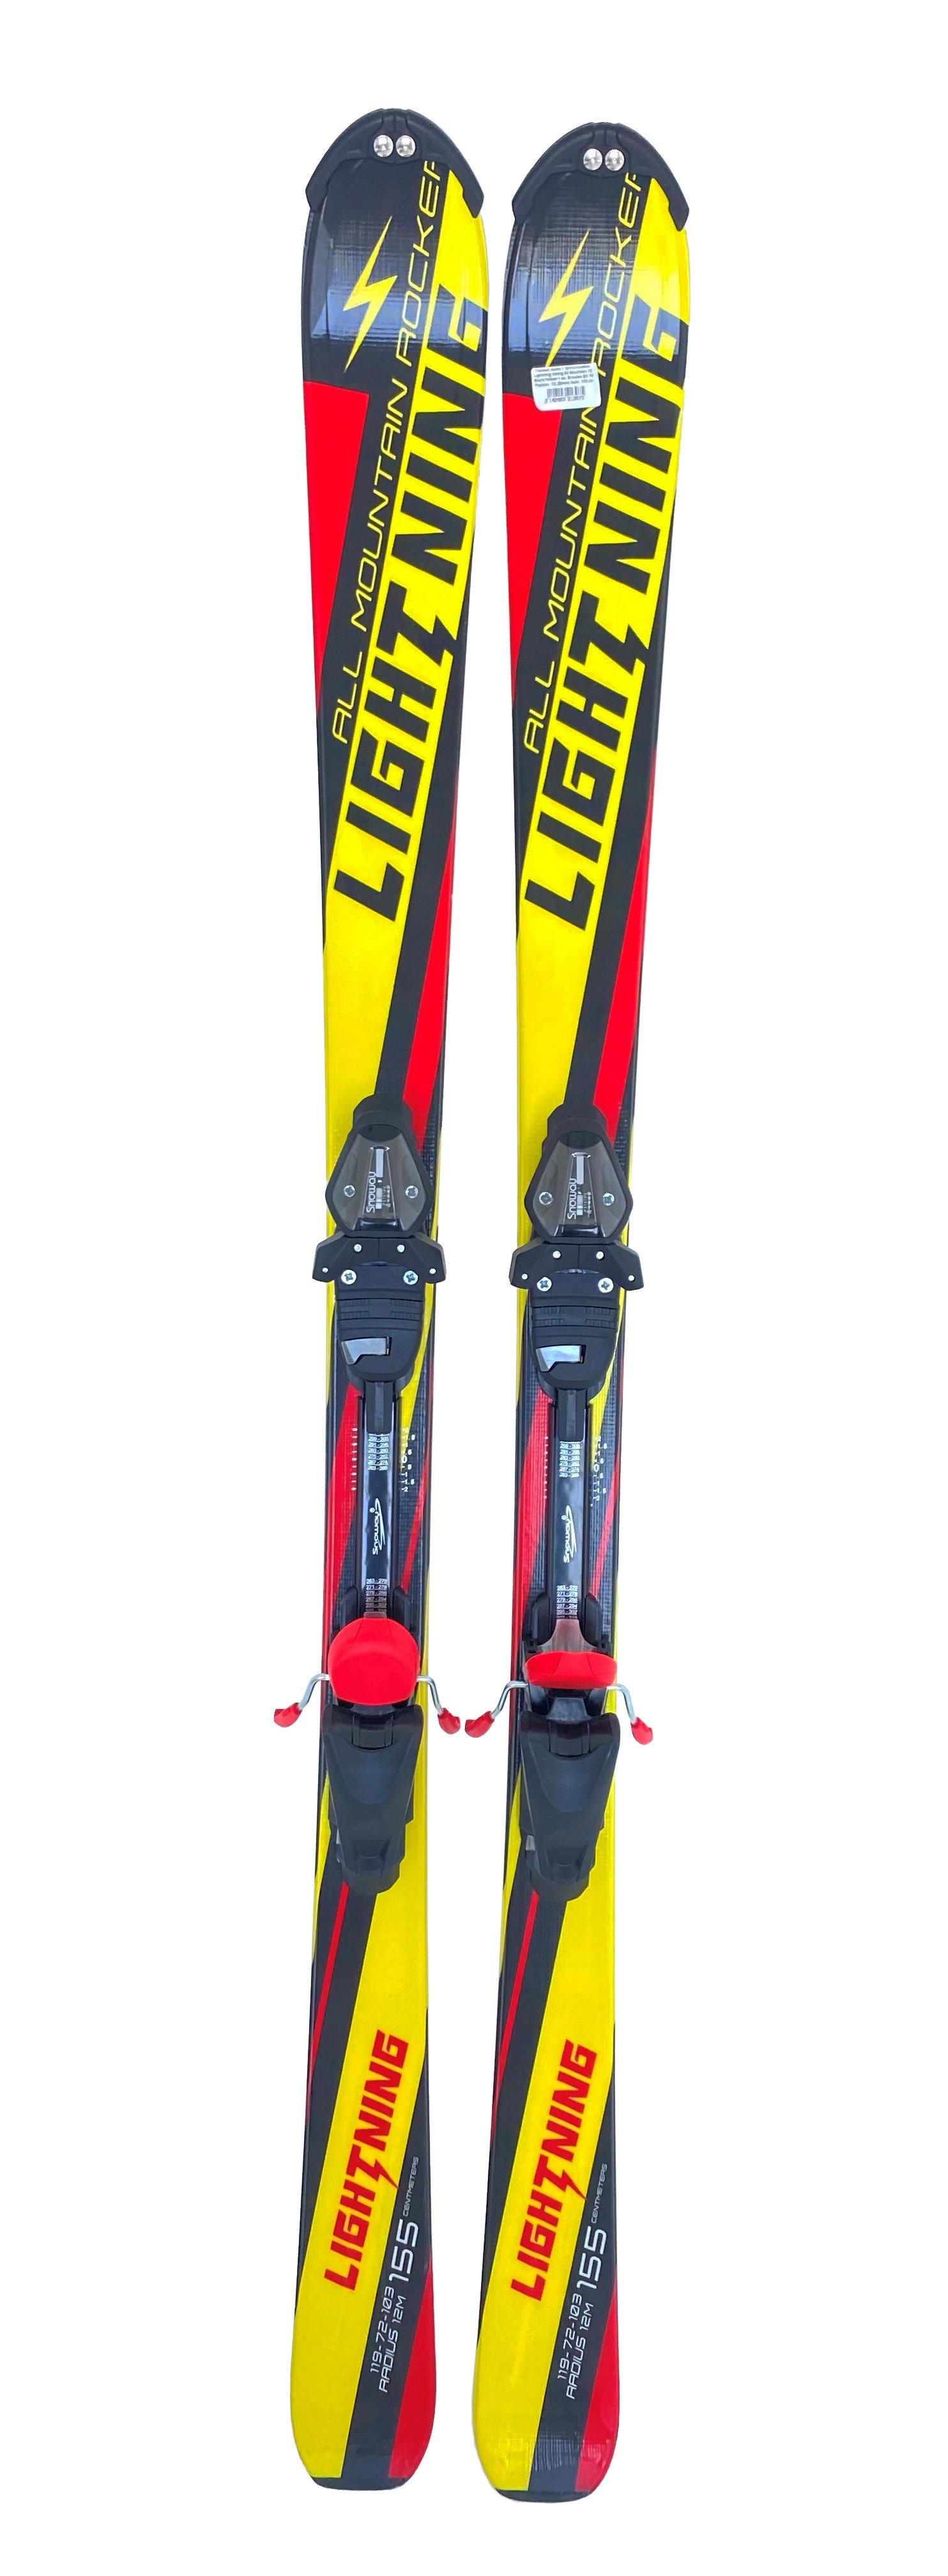 Горные лыжи с креплениями Lightning Xwing All Mountain 72 Black/Yellow + кр. Snoway SX 10 lightning black telescopic car key keychain backpack buckle accessory